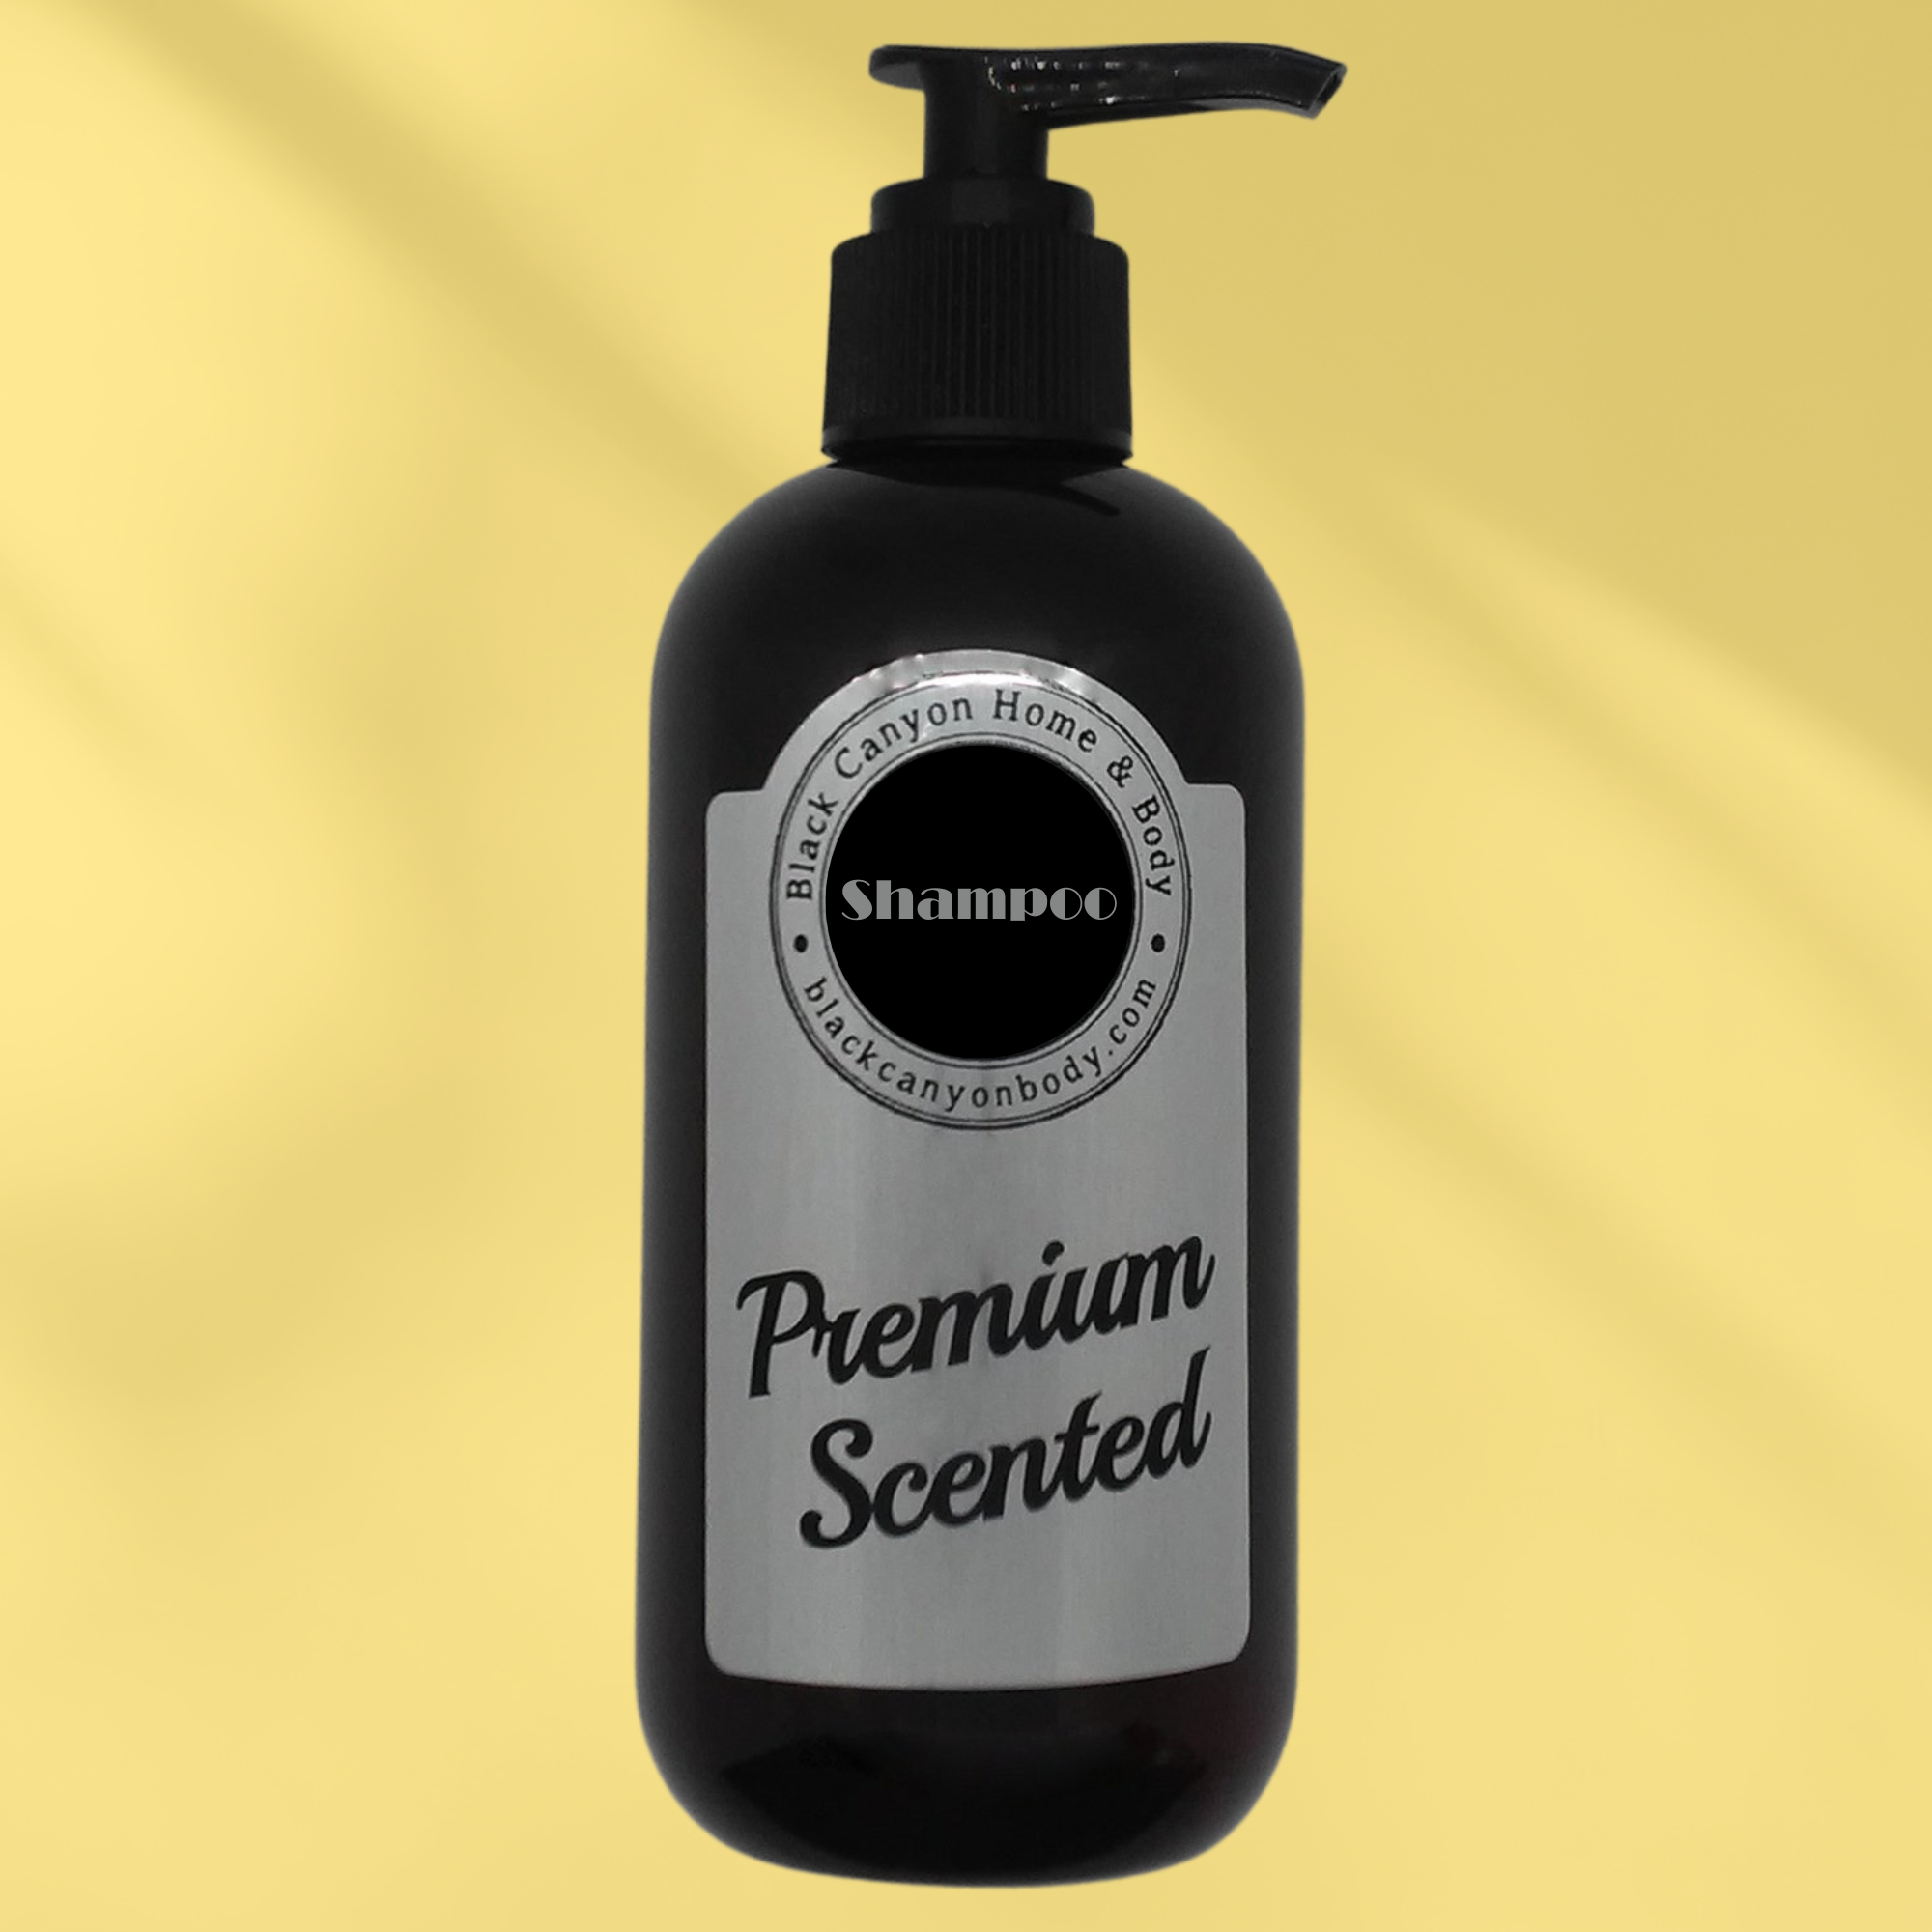 Paydens Cobalt Grapefruit & Spiced Woods Scented Shampoo with Argan Oil For Men